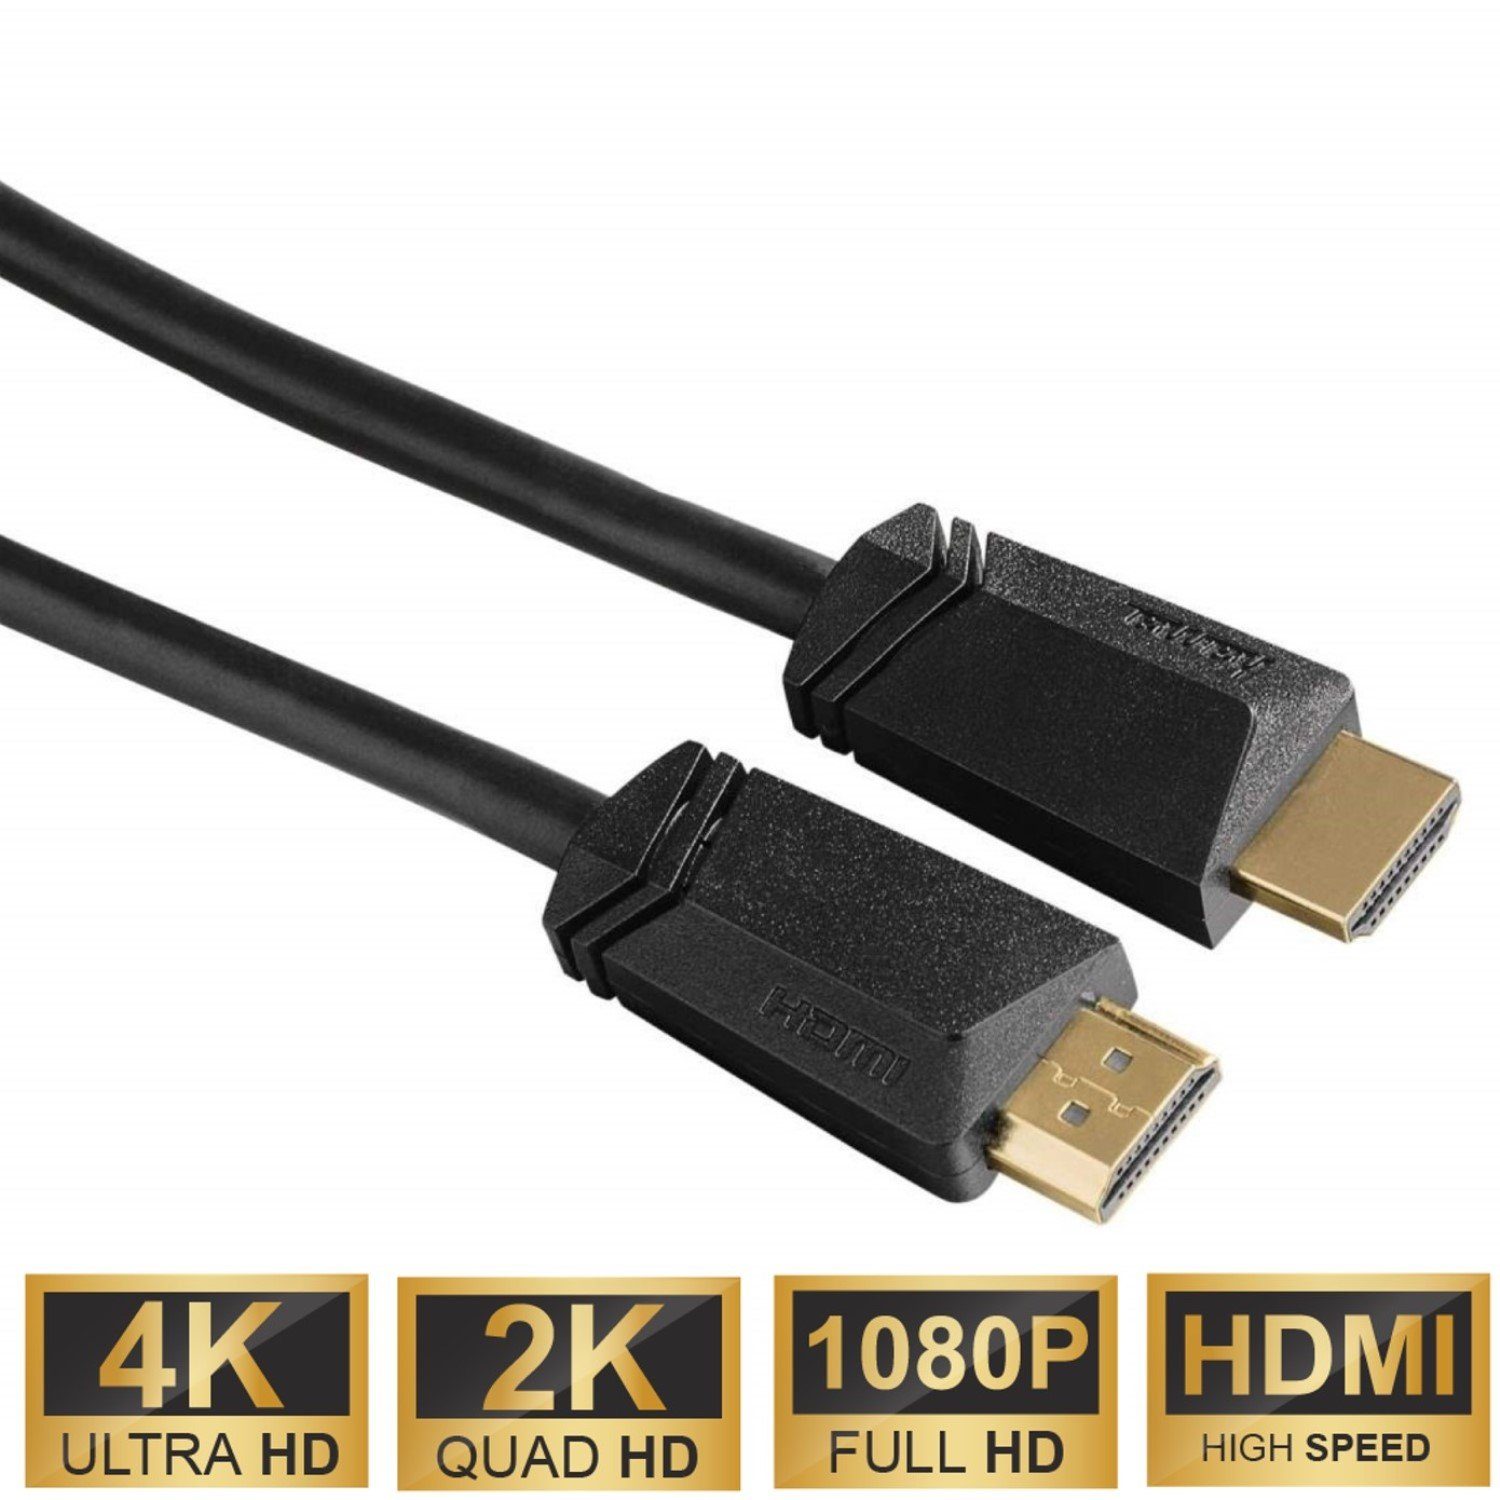 Hama High-Speed HDMI-Kabel 5m Ethernet vergoldet Video-Kabel, HDMI, (500  cm), 4K UHD Full HD TV ARC 3D 1080p HD TV LED LCD OLED vergoldete Stecker,  Optimierter Knickschutz durch flexible Materialien verhindert Kabelbruch